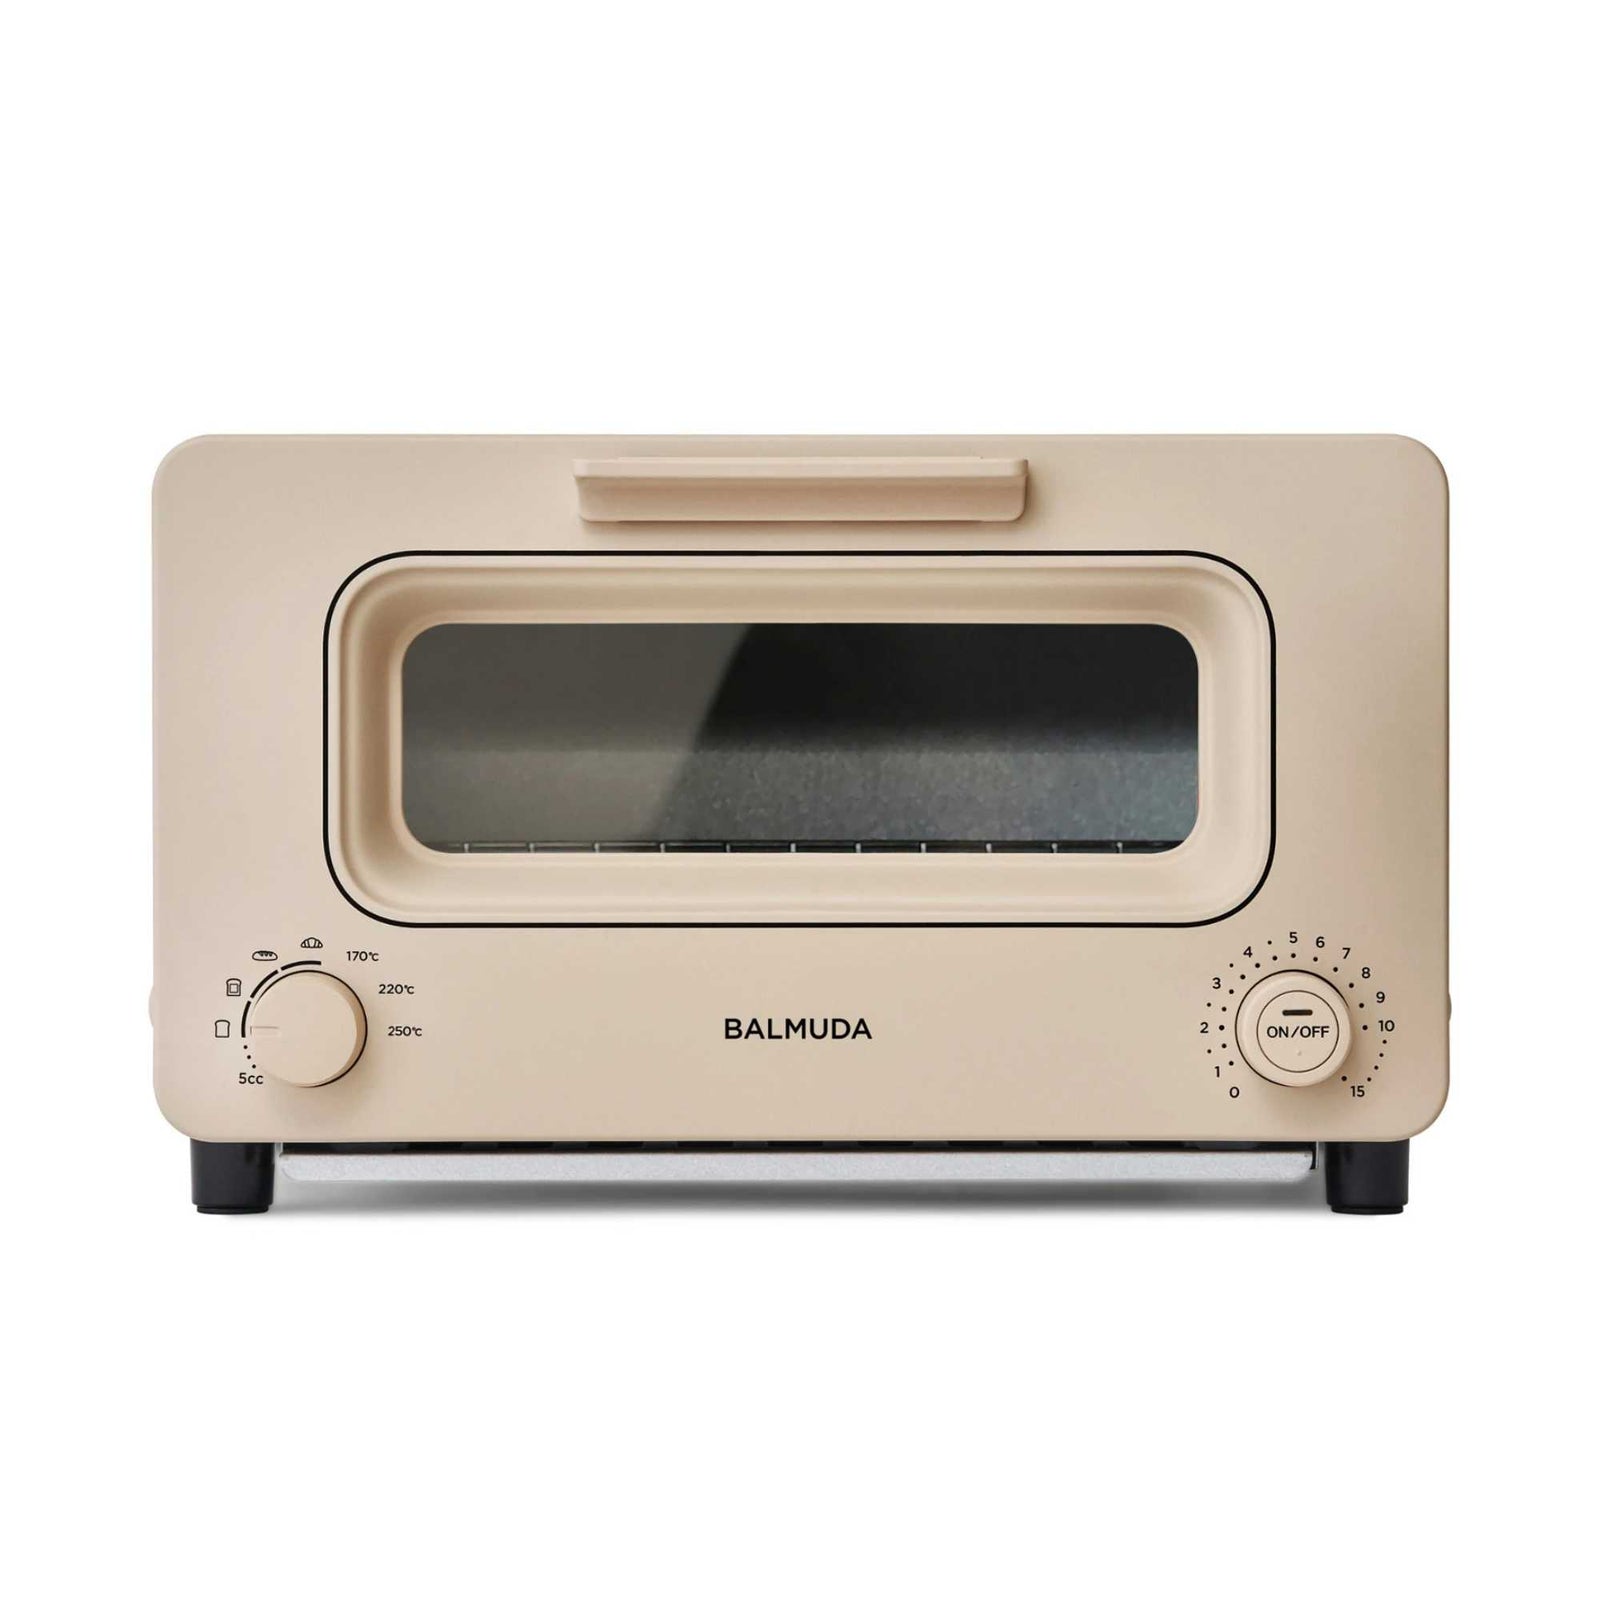 Balmuda The Toaster, white | HOMELESS.hk